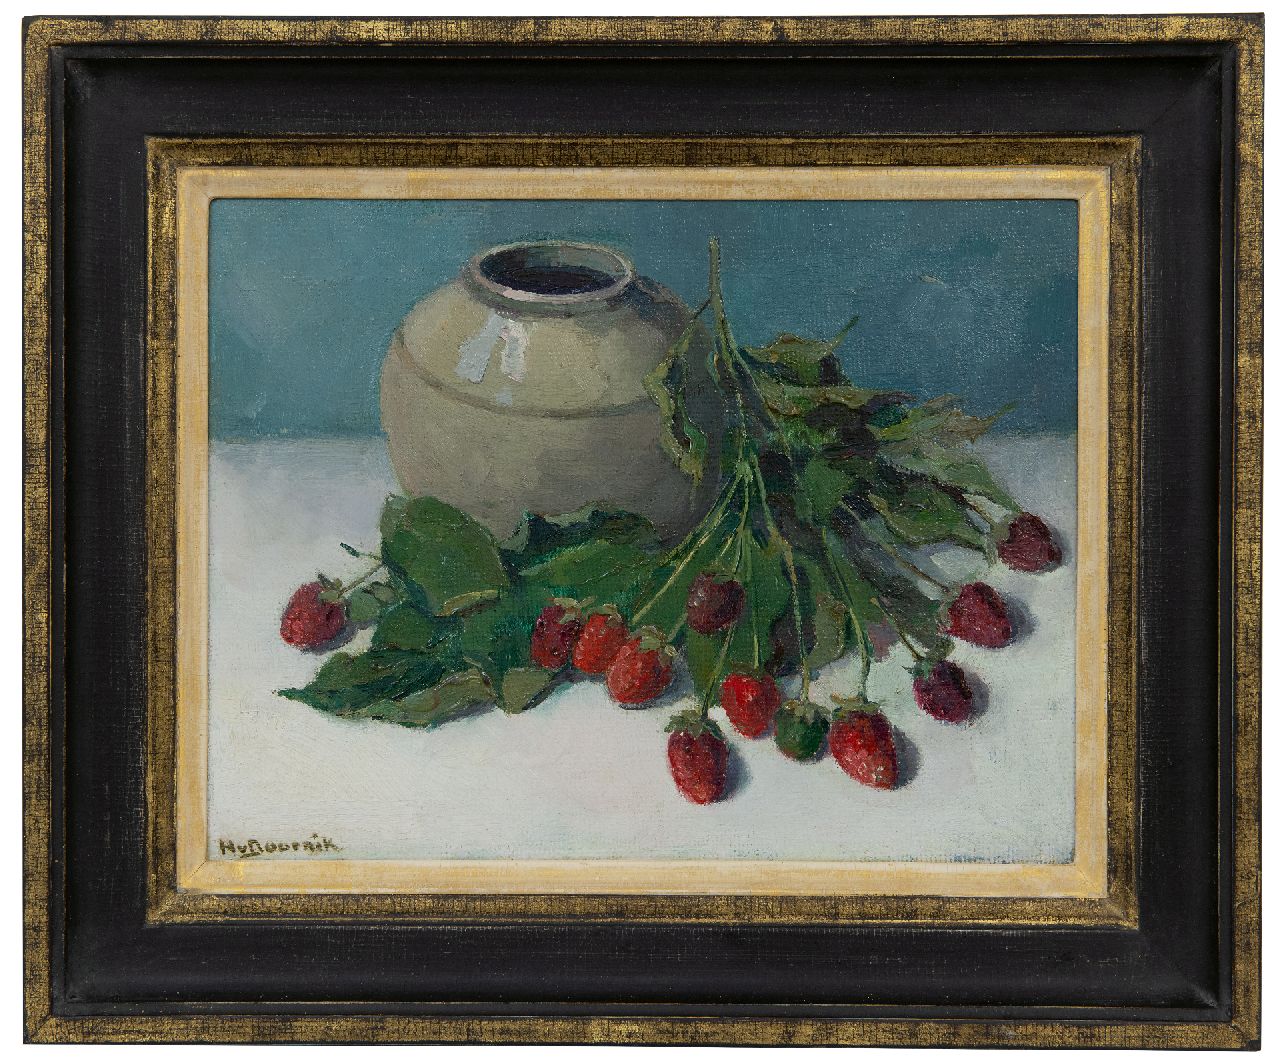 Doornik H. van | Heertje van Doornik | Paintings offered for sale | Still life of wild strawberries and ginger jar, oil on painter's board 24.0 x 31.6 cm, signed l.l.